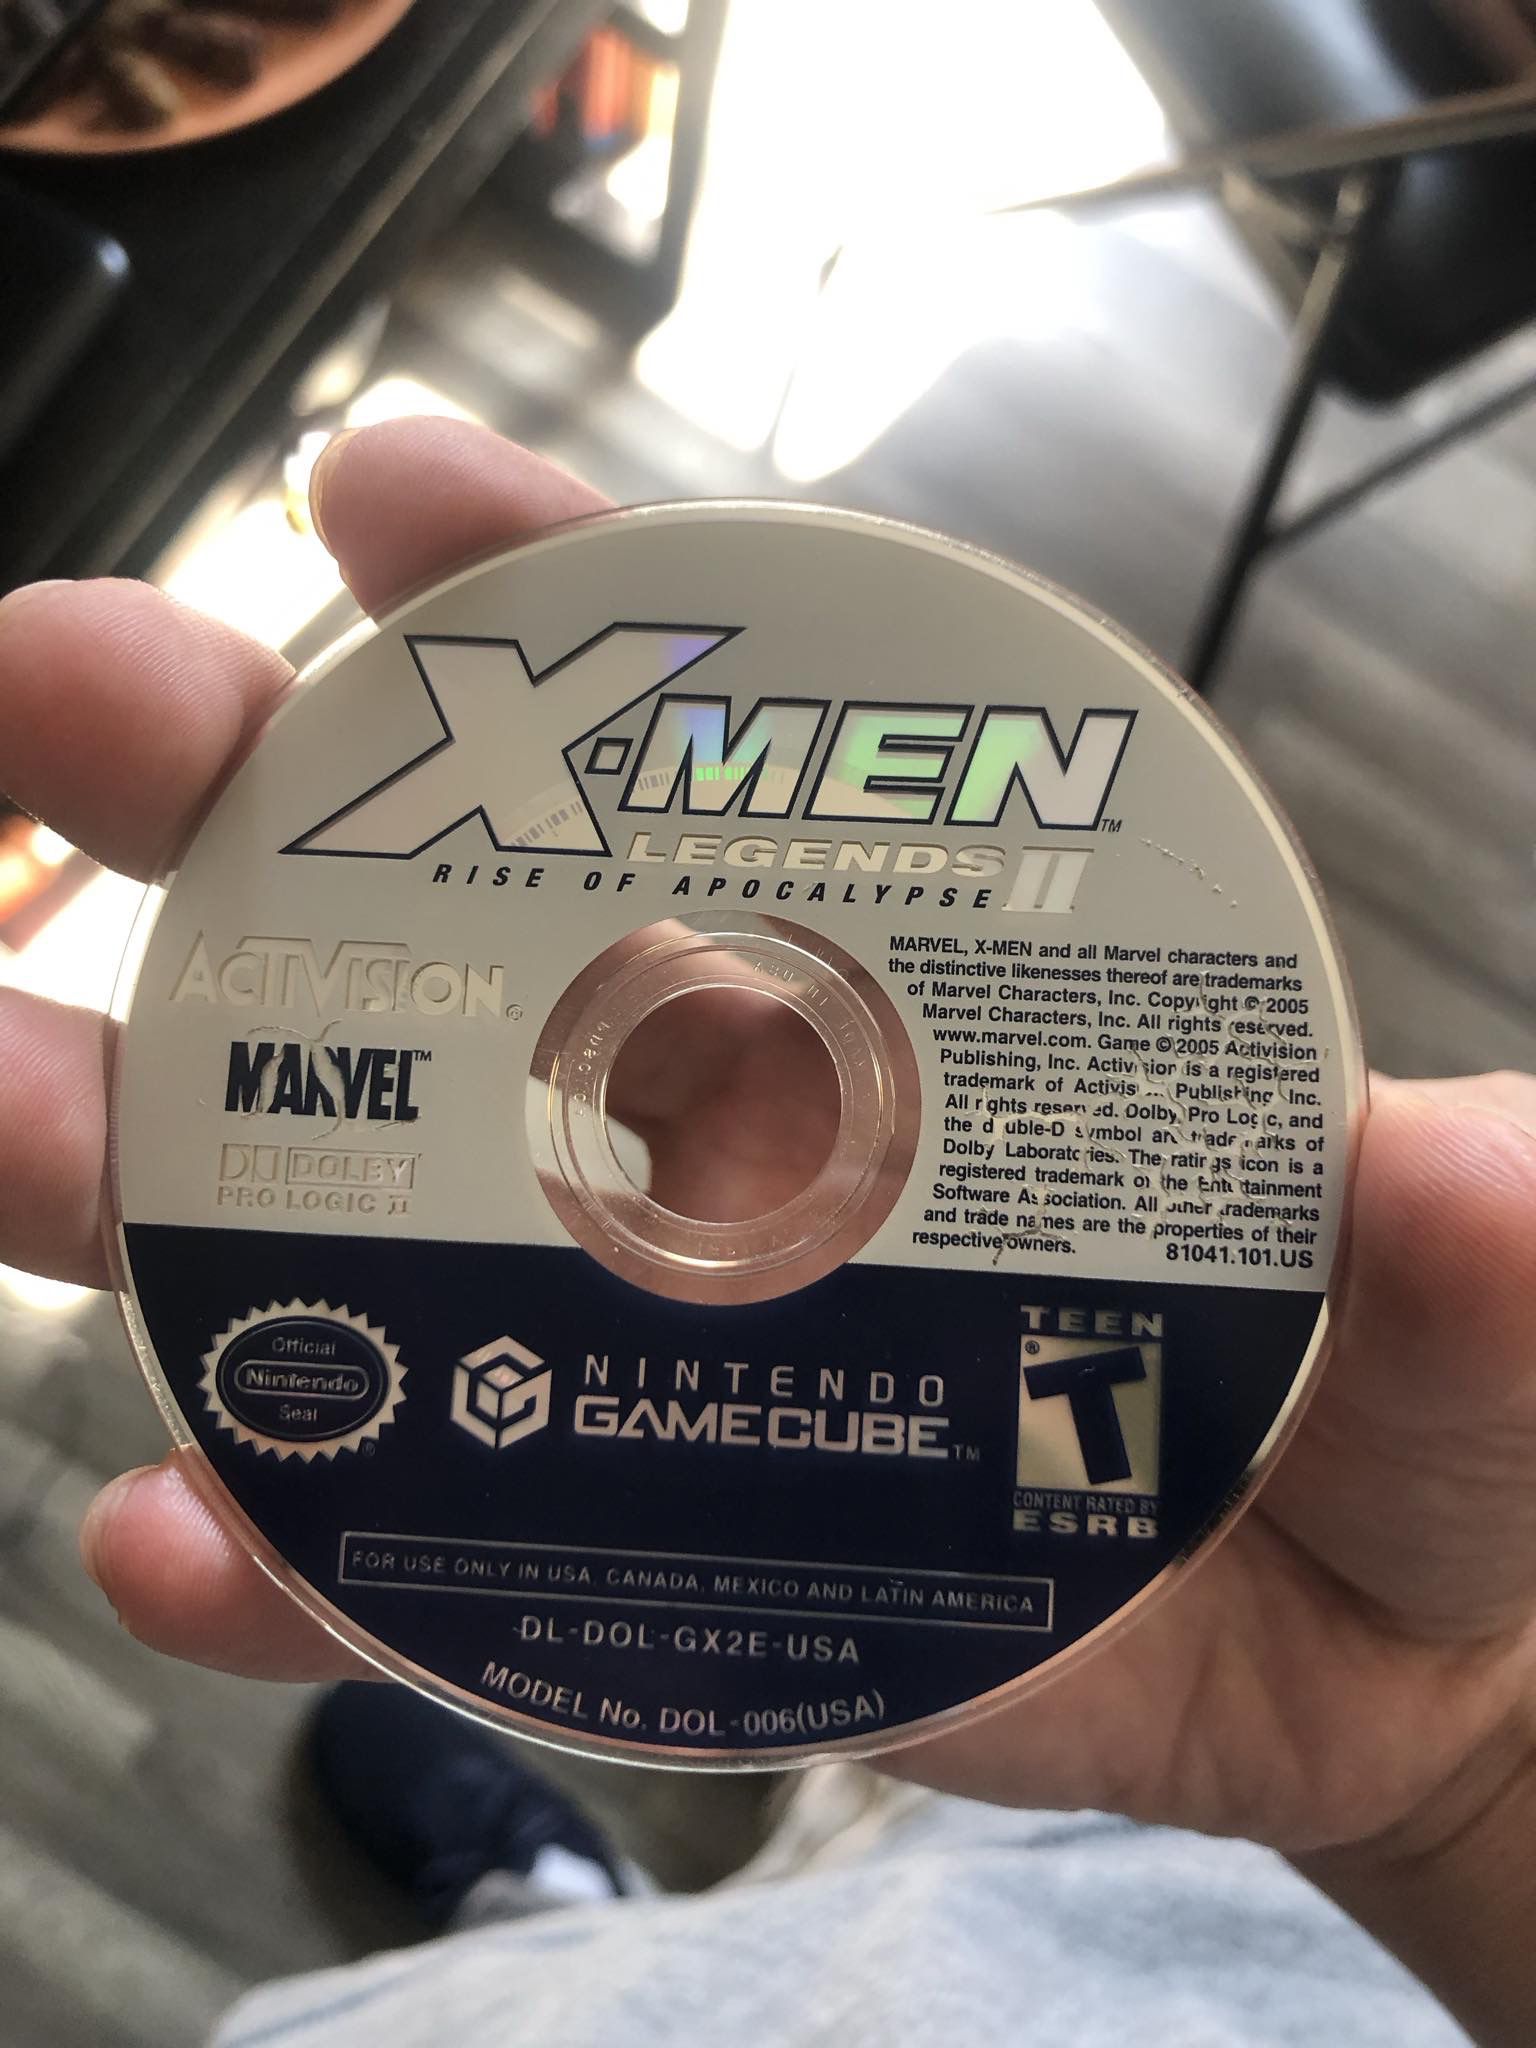 GameCube X-men Legend 2 Disc only